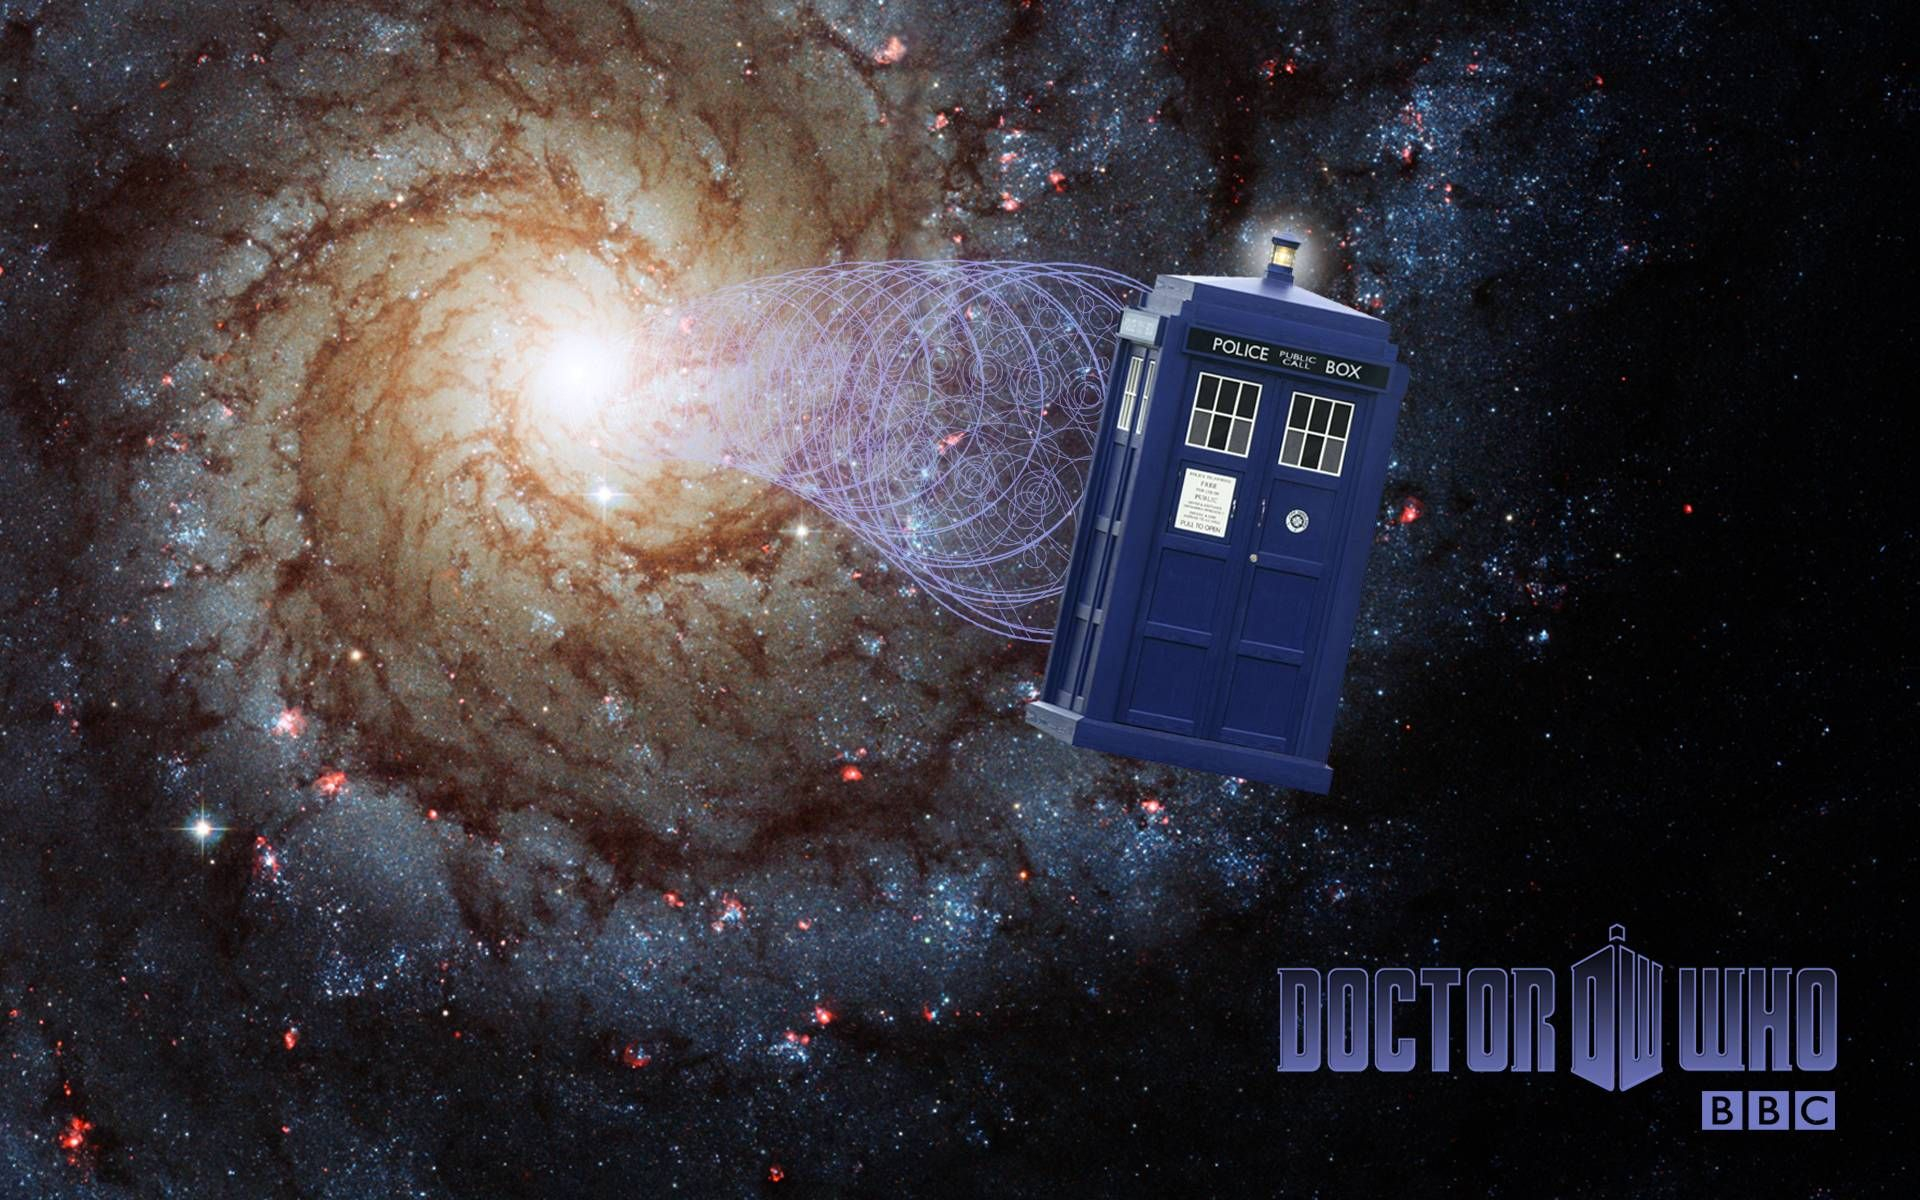 1920x1200 Free Doctor Who Logo BBC Wallpaper. | Fondo de pantalla tardis, The tardis, Doctor wh